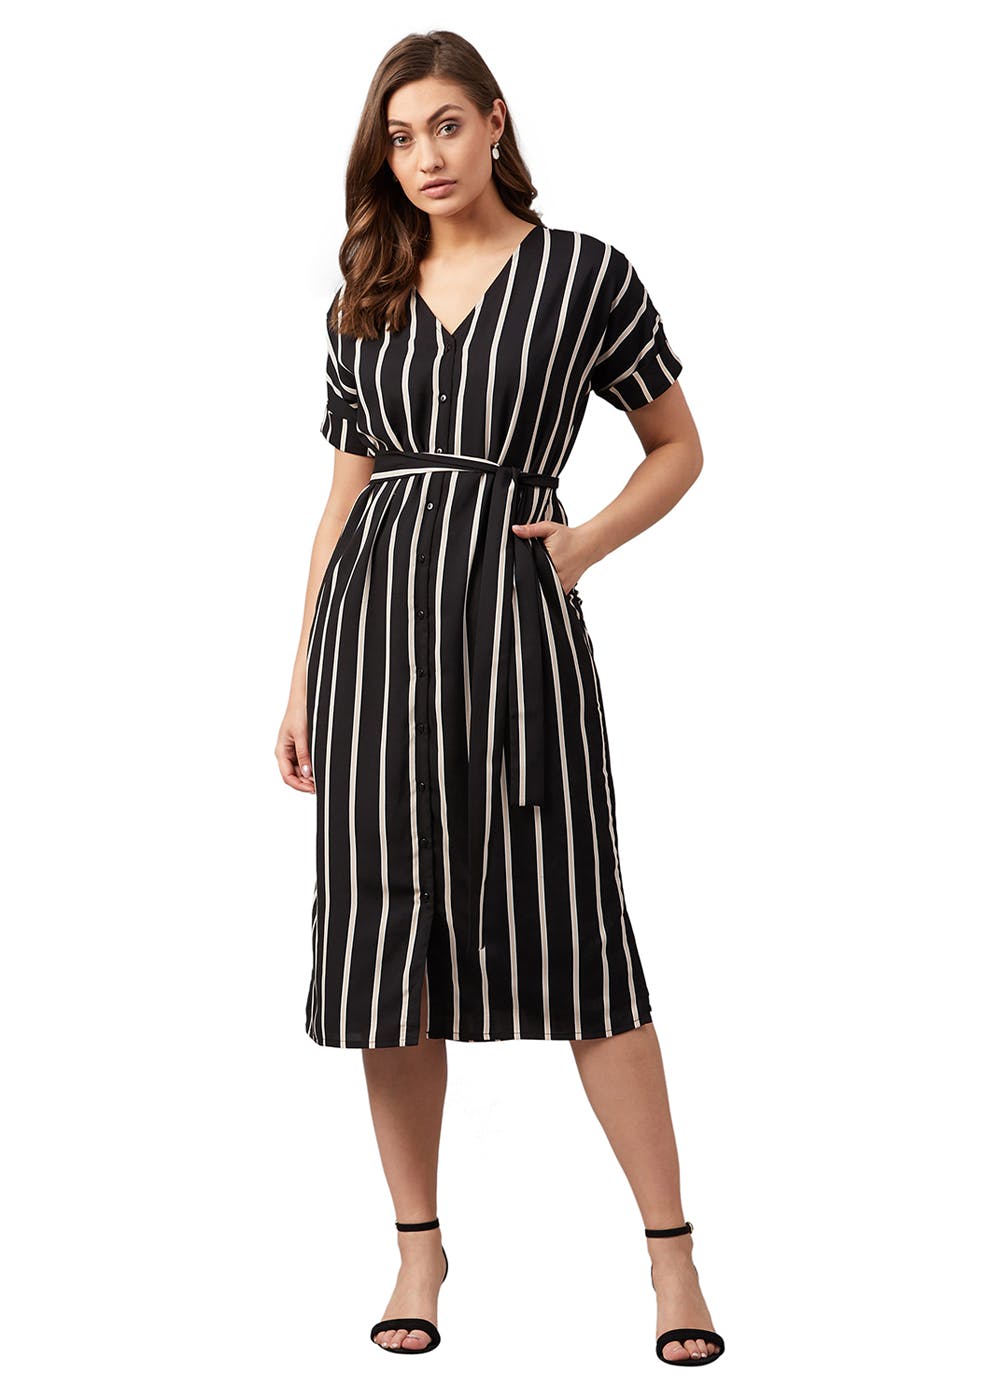 Get V-Neck Vertical Striped Waist Tie Up Midi Dress at ₹ 1424 | LBB Shop